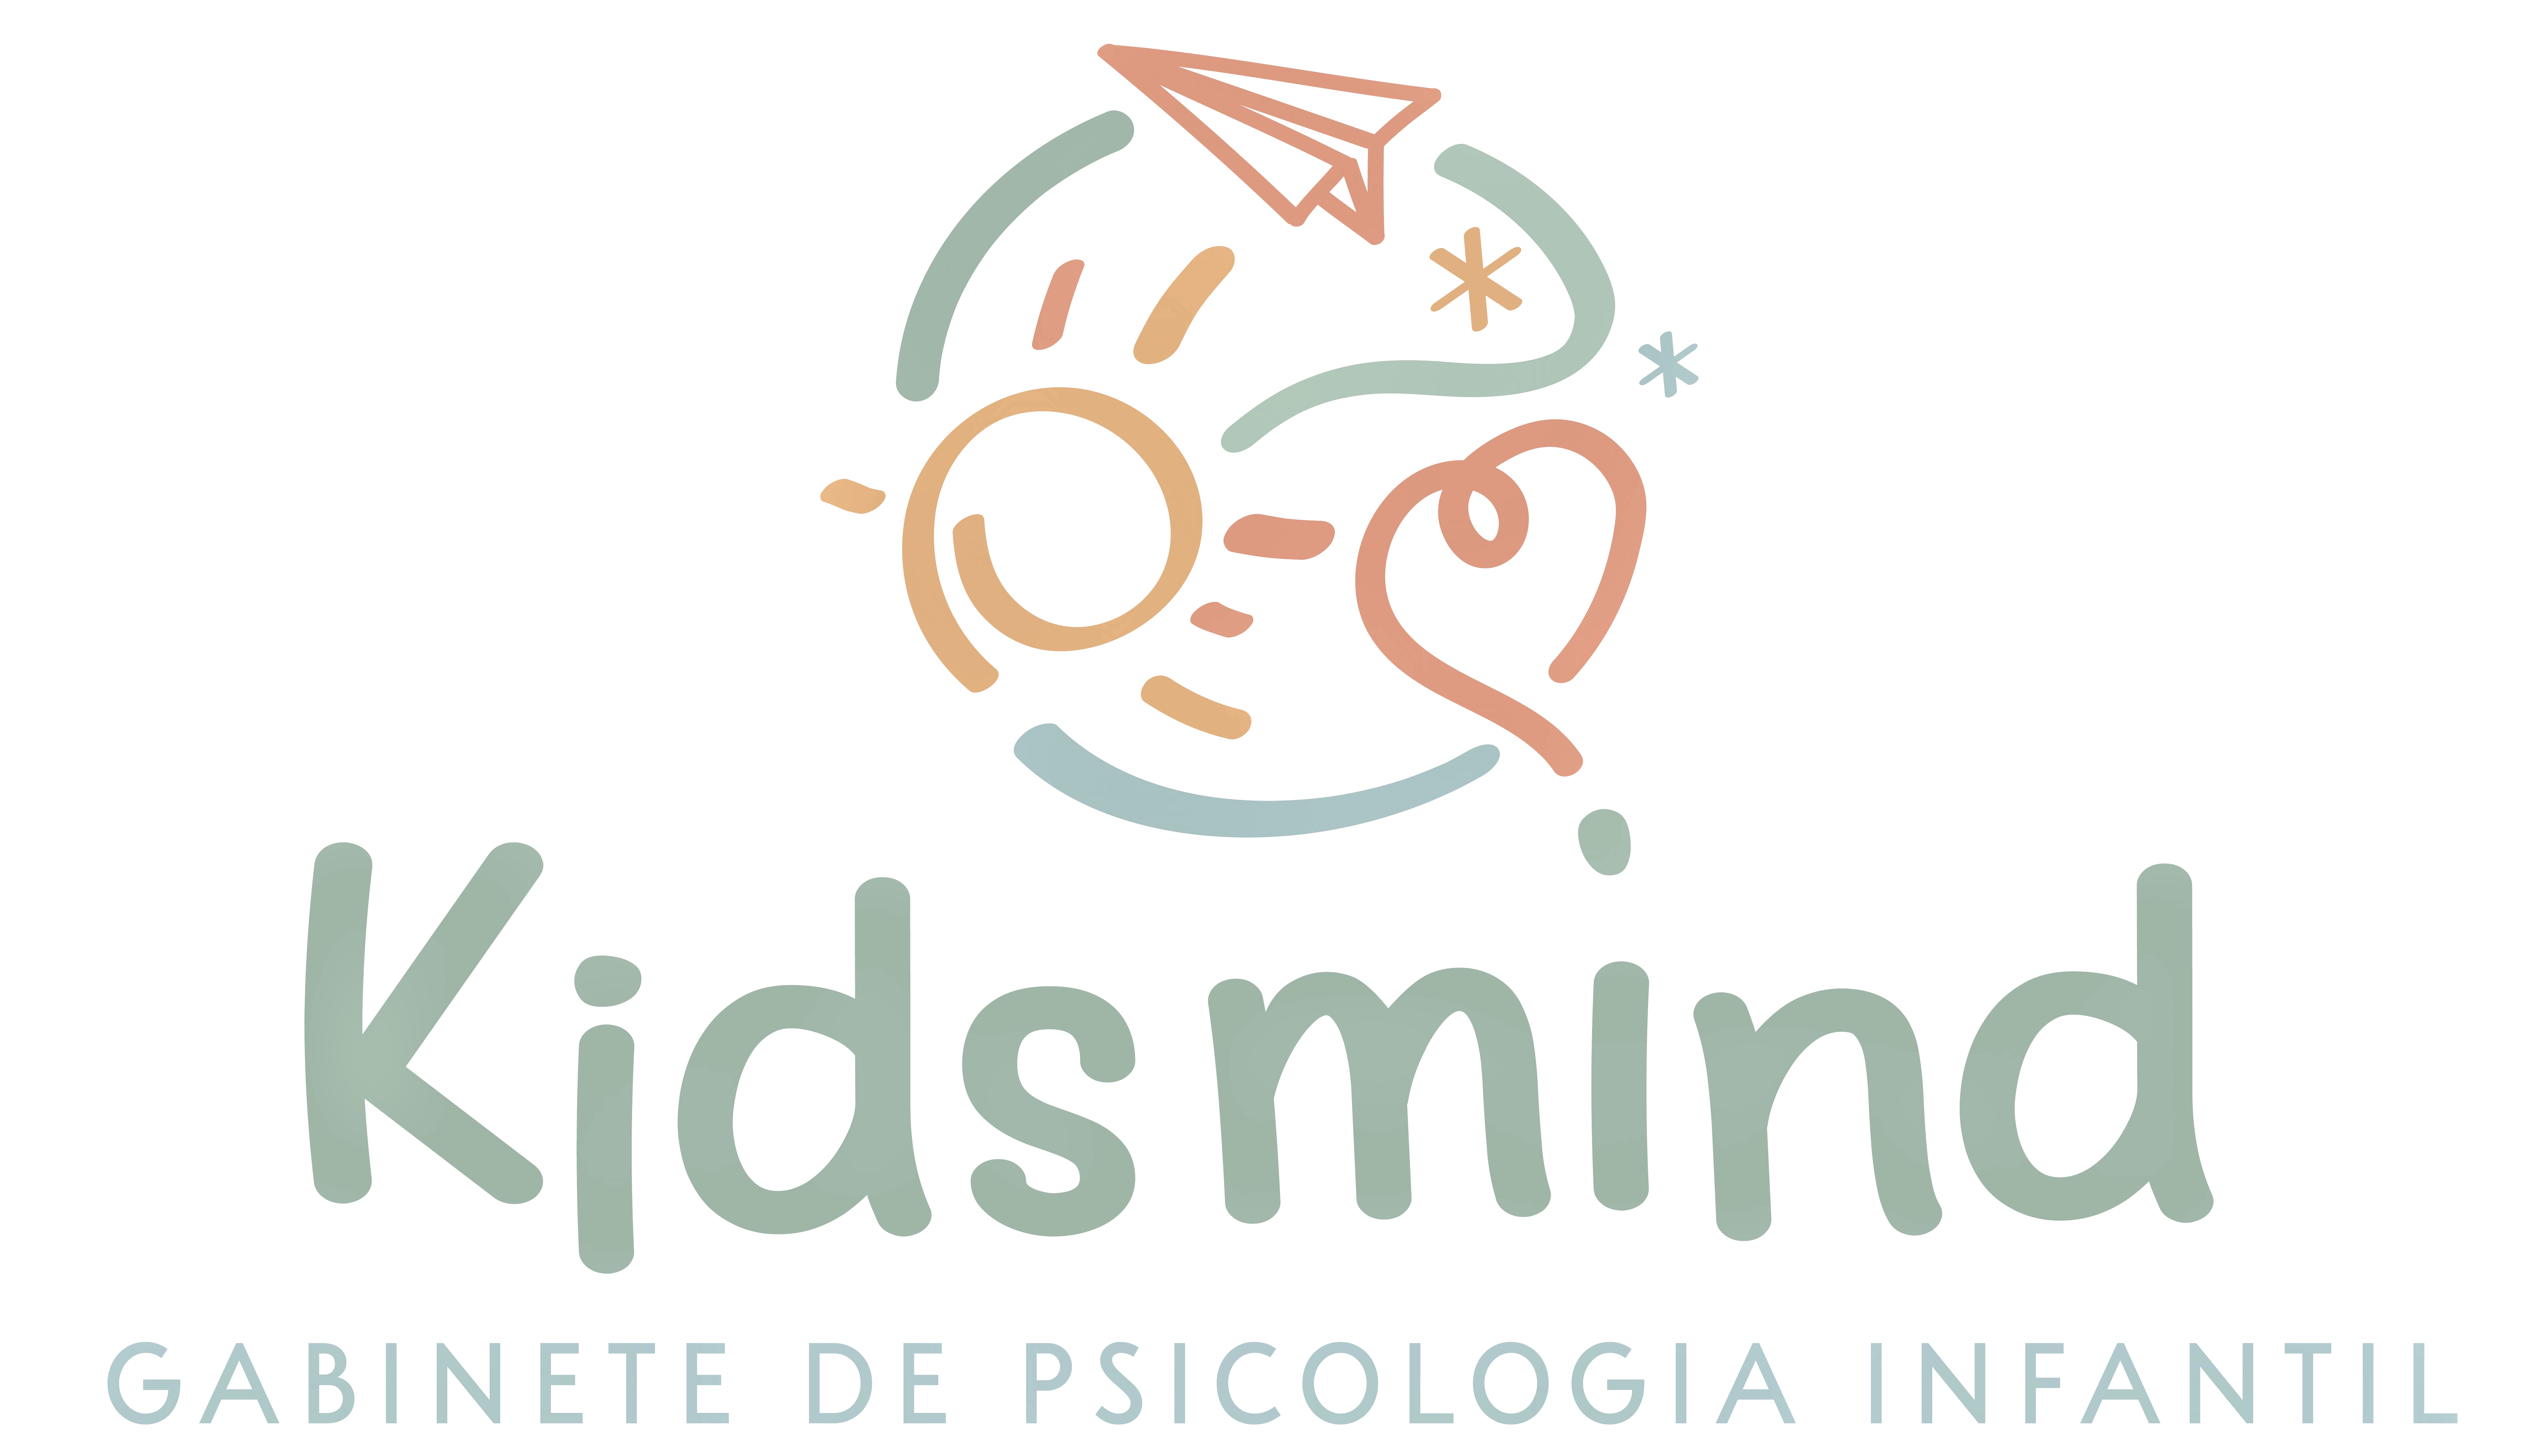 Kids mind - Gabinete de Psicologia Infantil